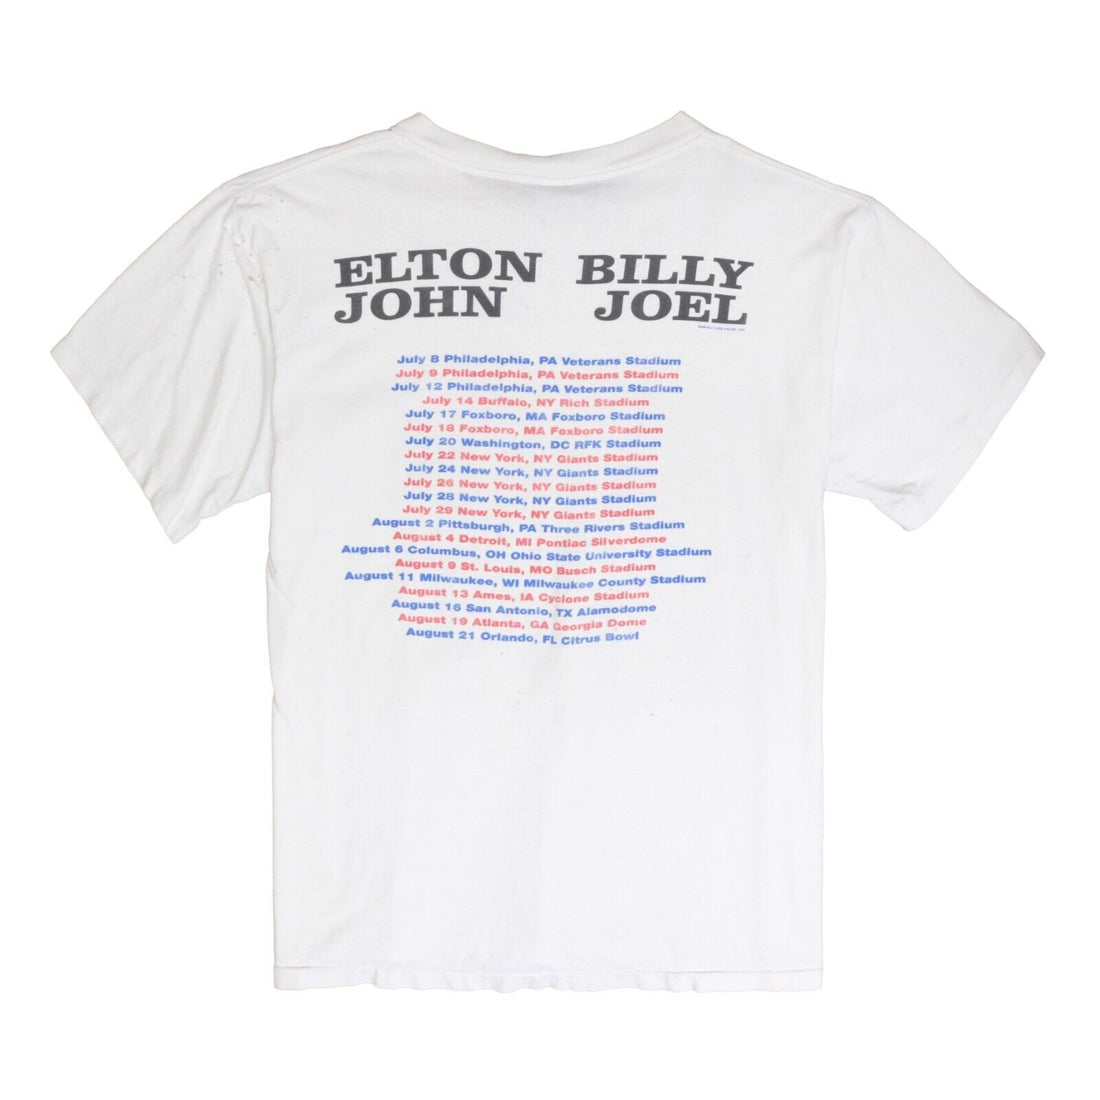 Vintage Elton John Billy Joel Tour T-Shirt Size XL White Music Tee 90s